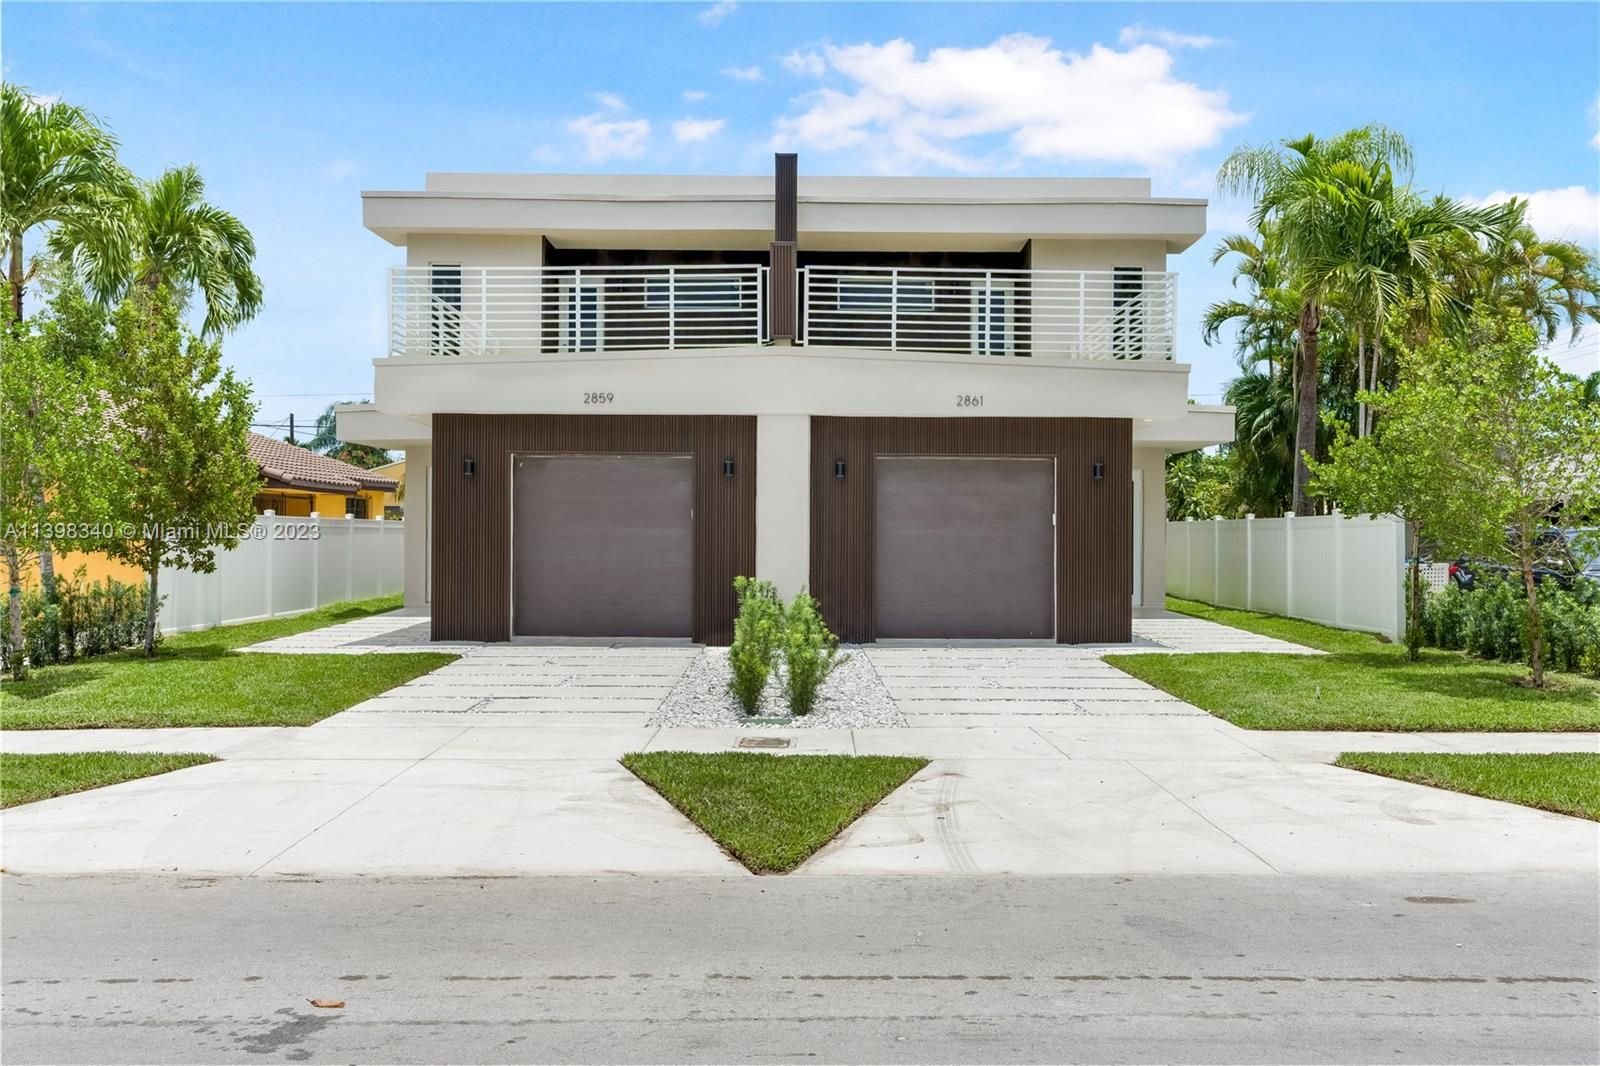 Real estate property located at 2859 37th Ct #2861, Miami-Dade County, Miami, FL